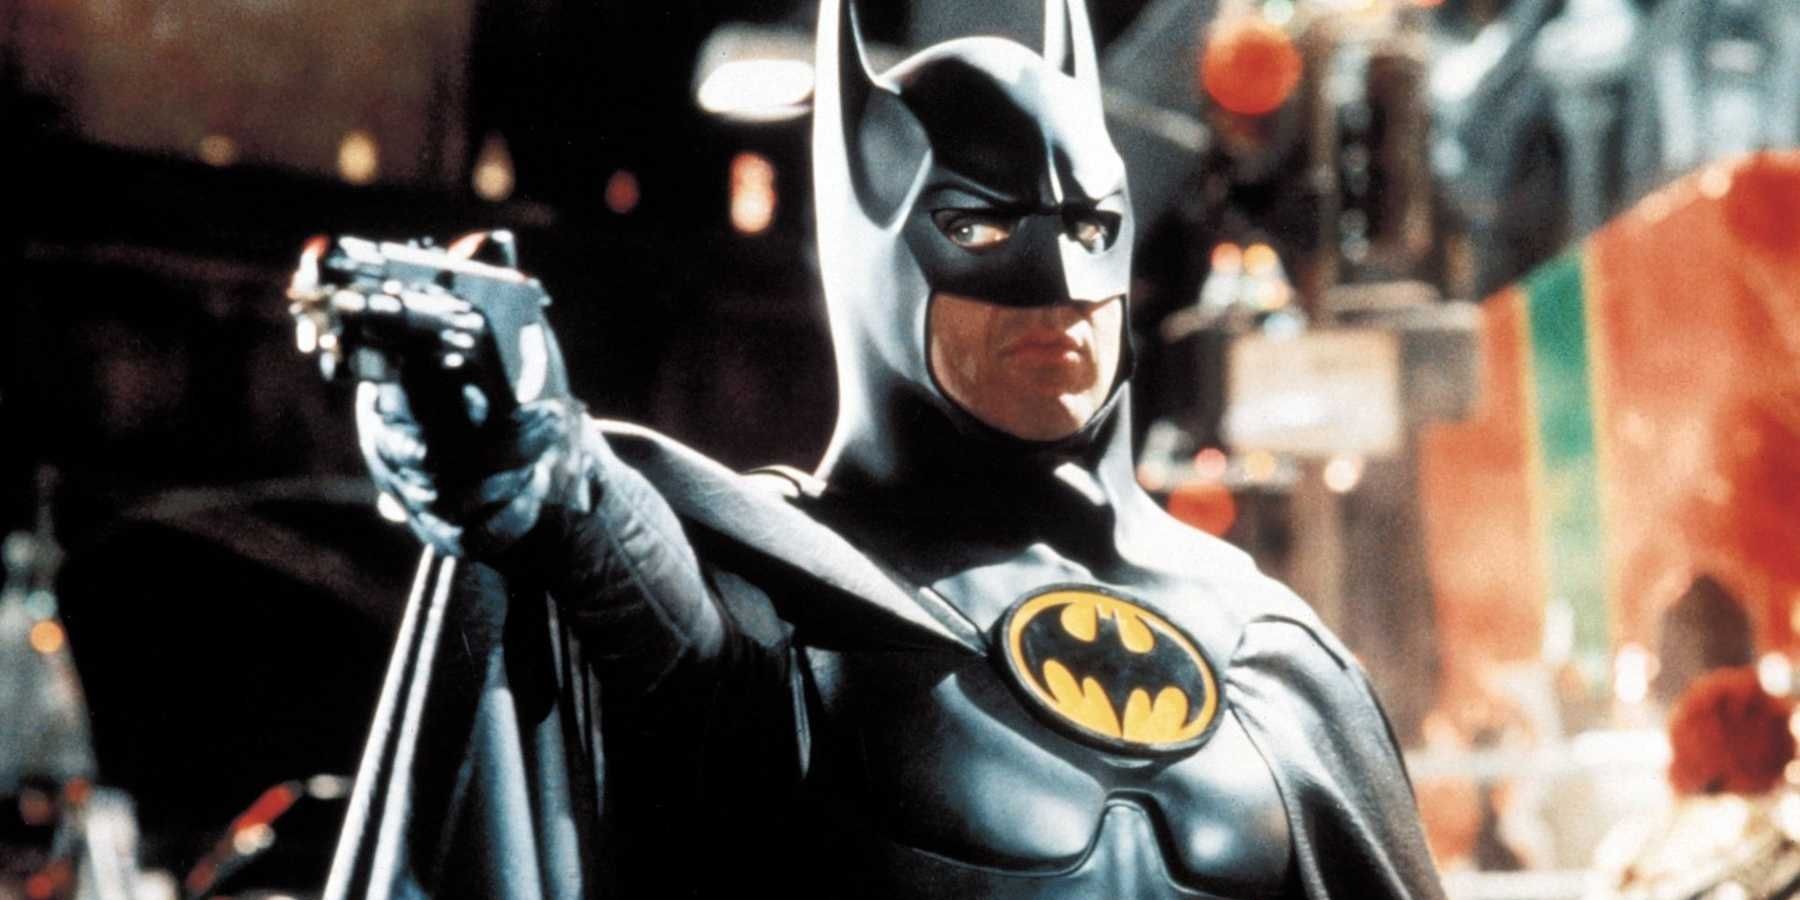 Michael Keaton's Batman aiming his grapple gun in Batman Returns